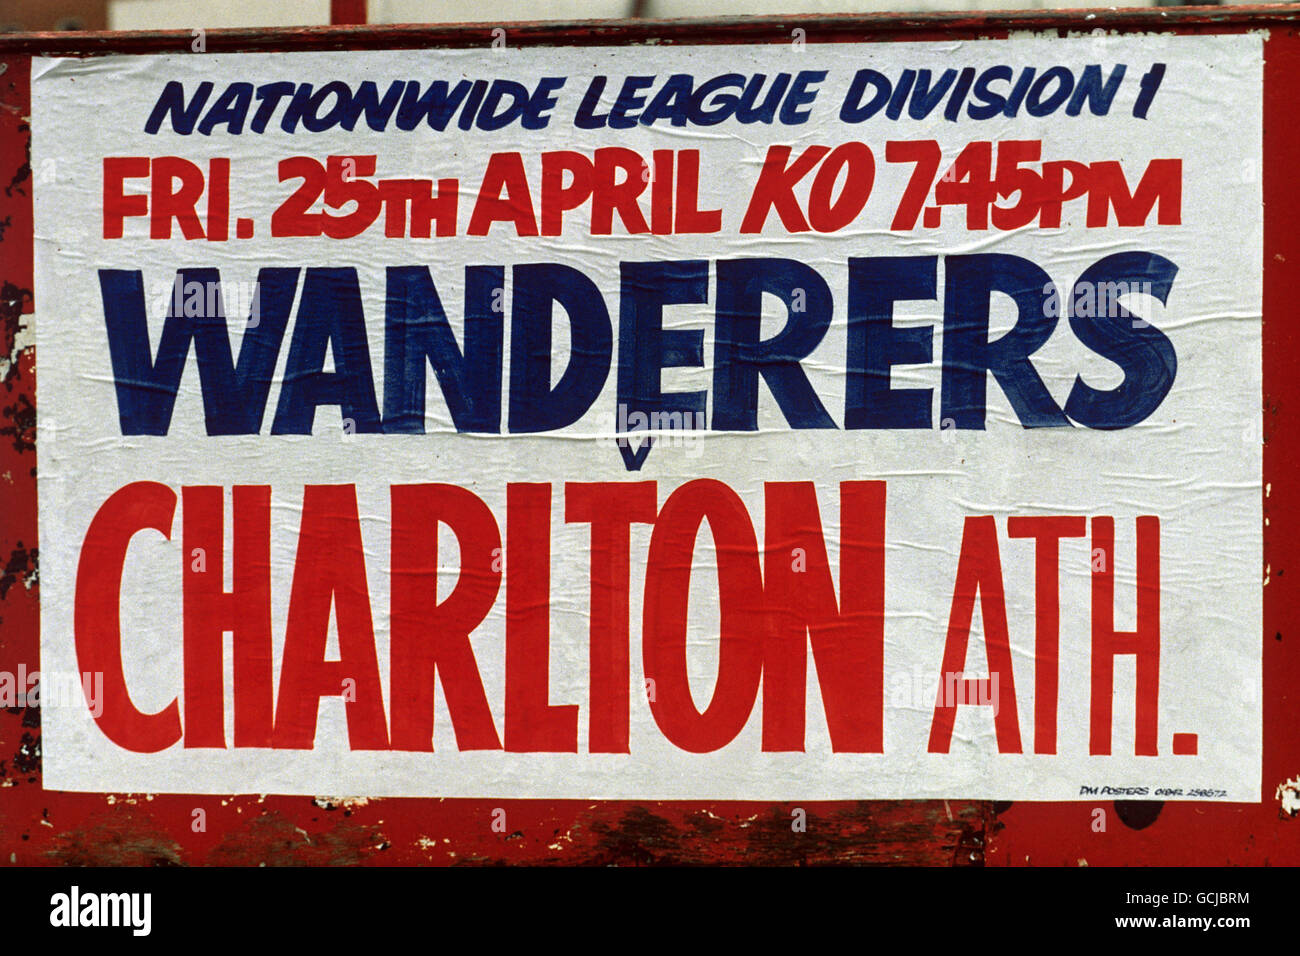 Soccer - Nationwide League Division One - Bolton Wanderers v Charlton Athletic - Burnden Park Stock Photo